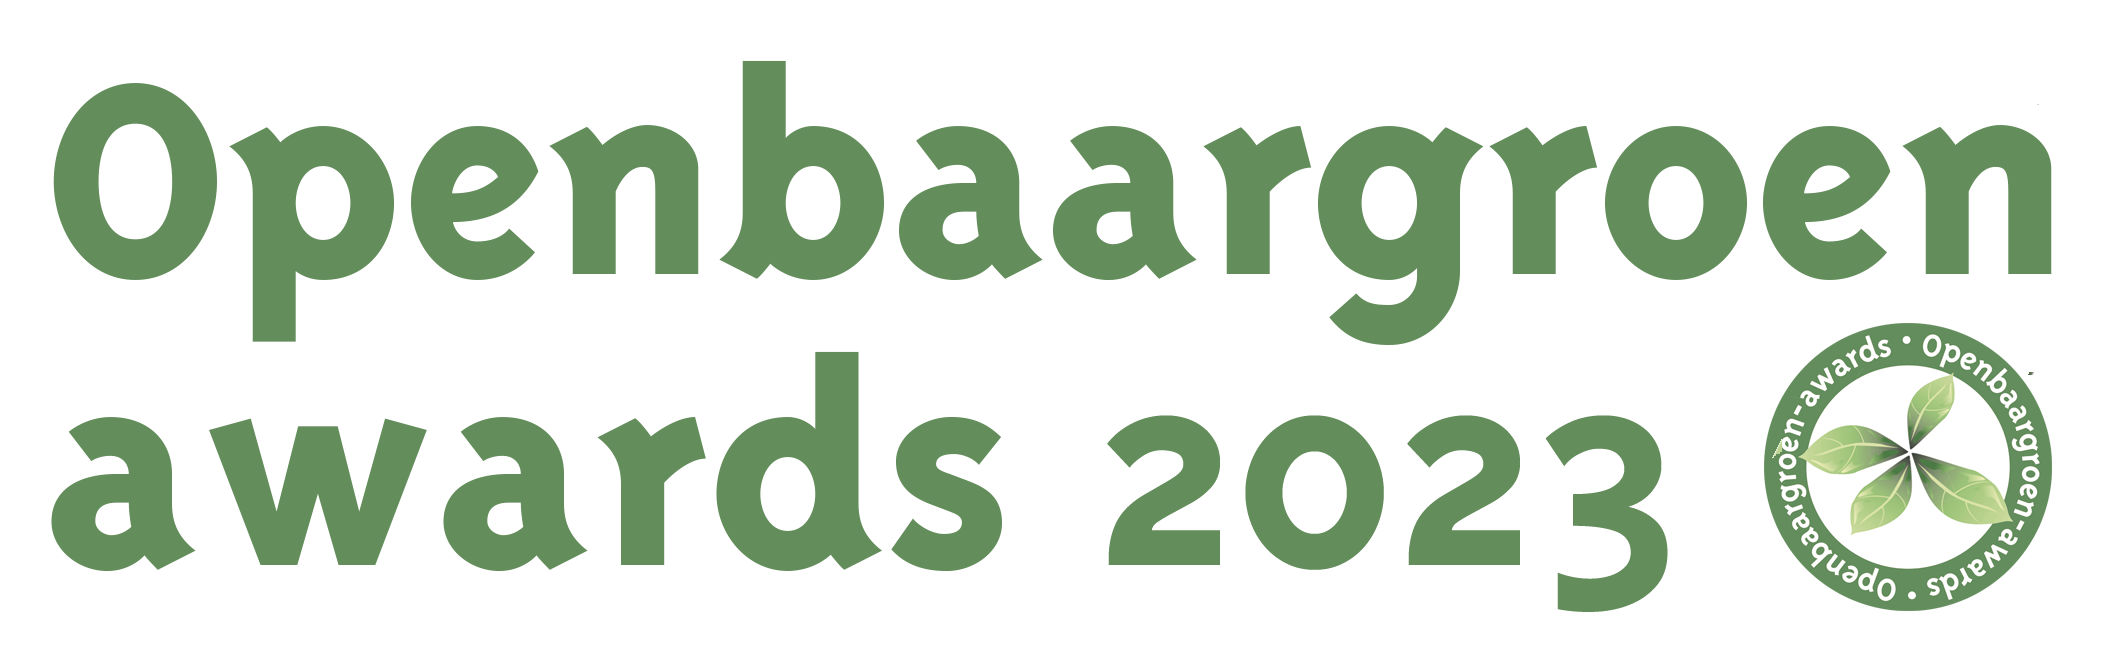 Openbaargroen-awards 2023